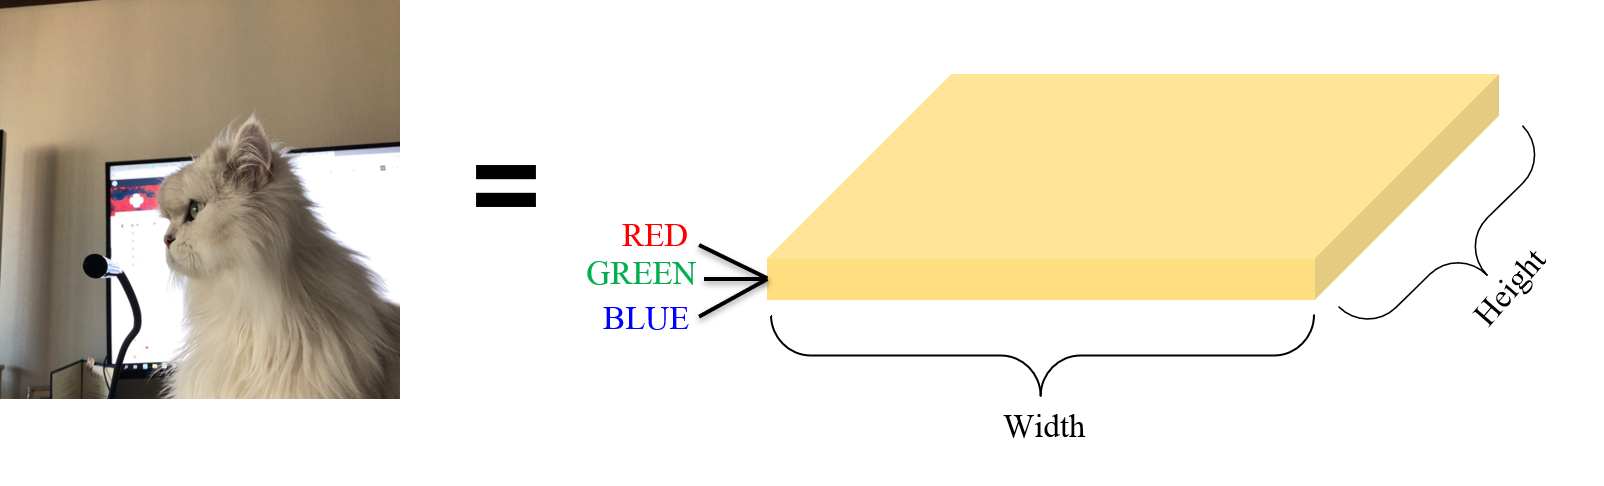 RGB-image